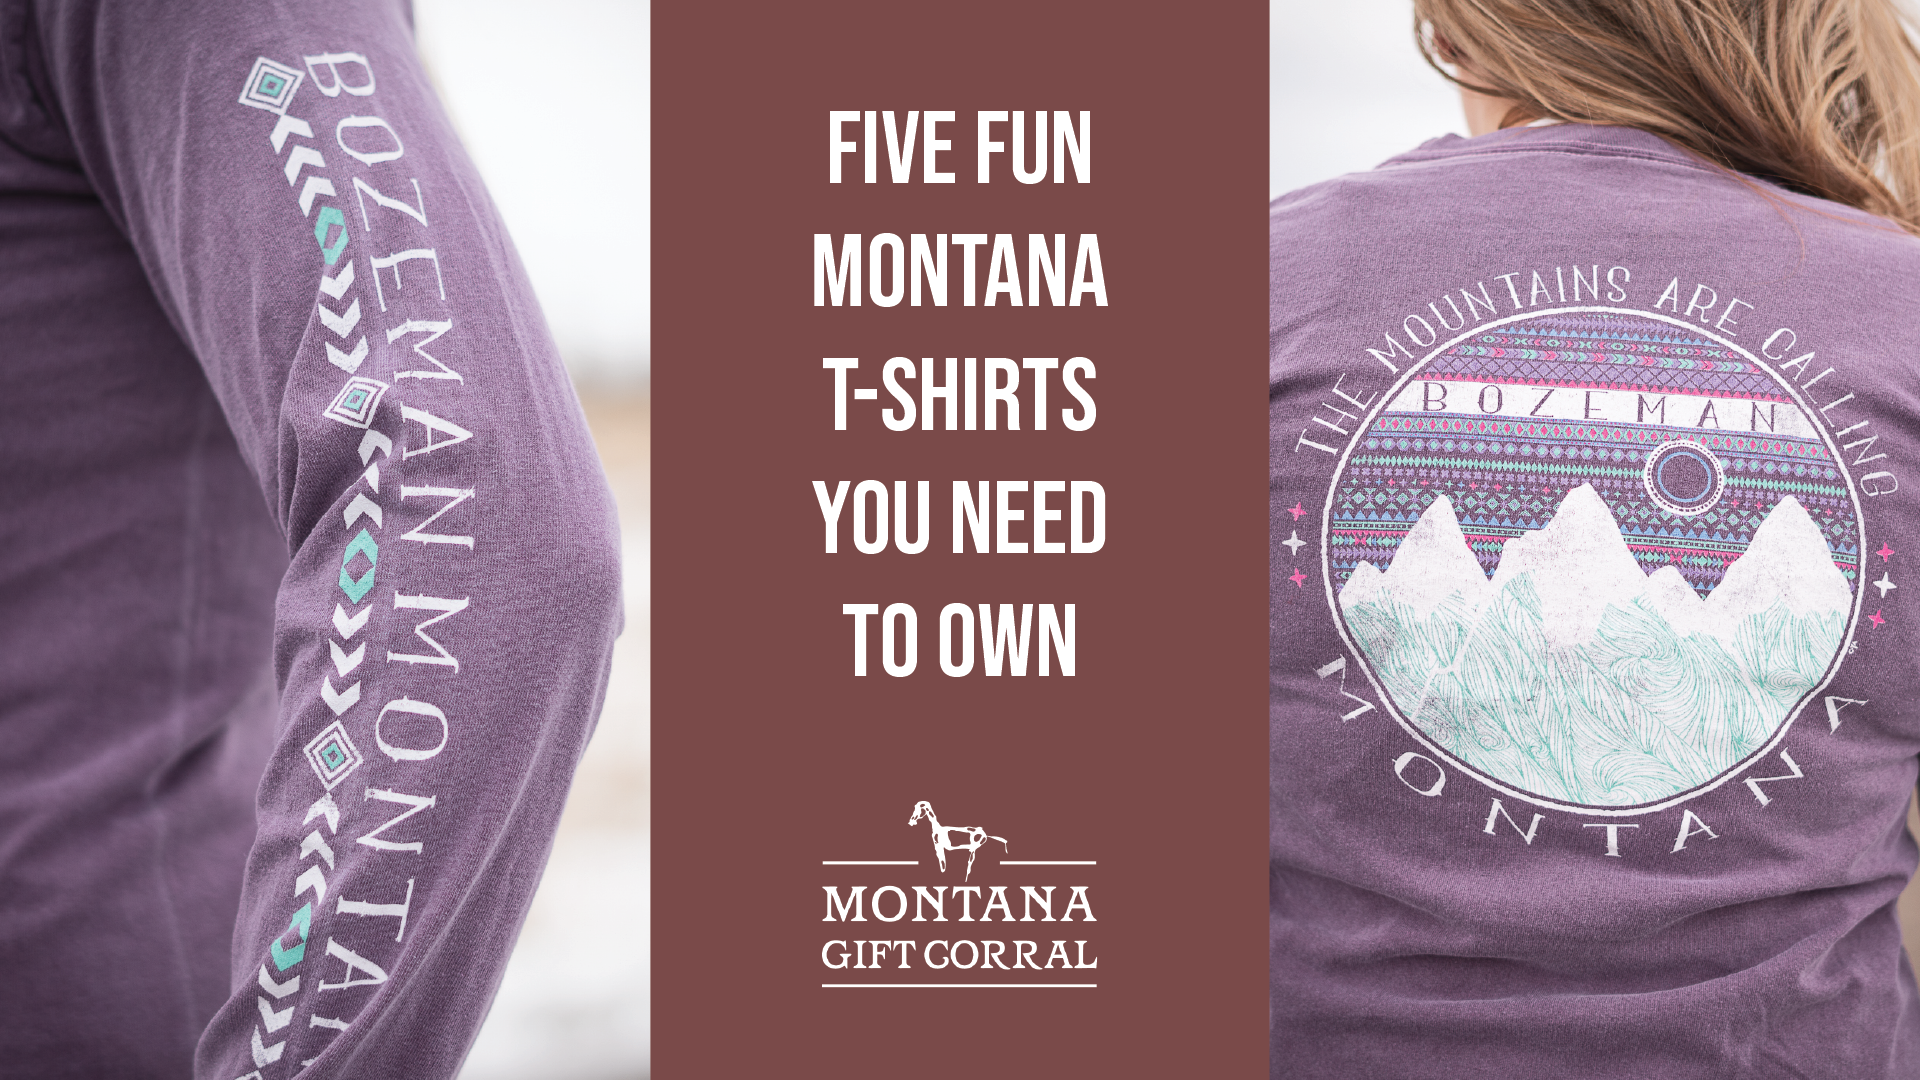 Five Fun Montana T-Shirts You Need to Own